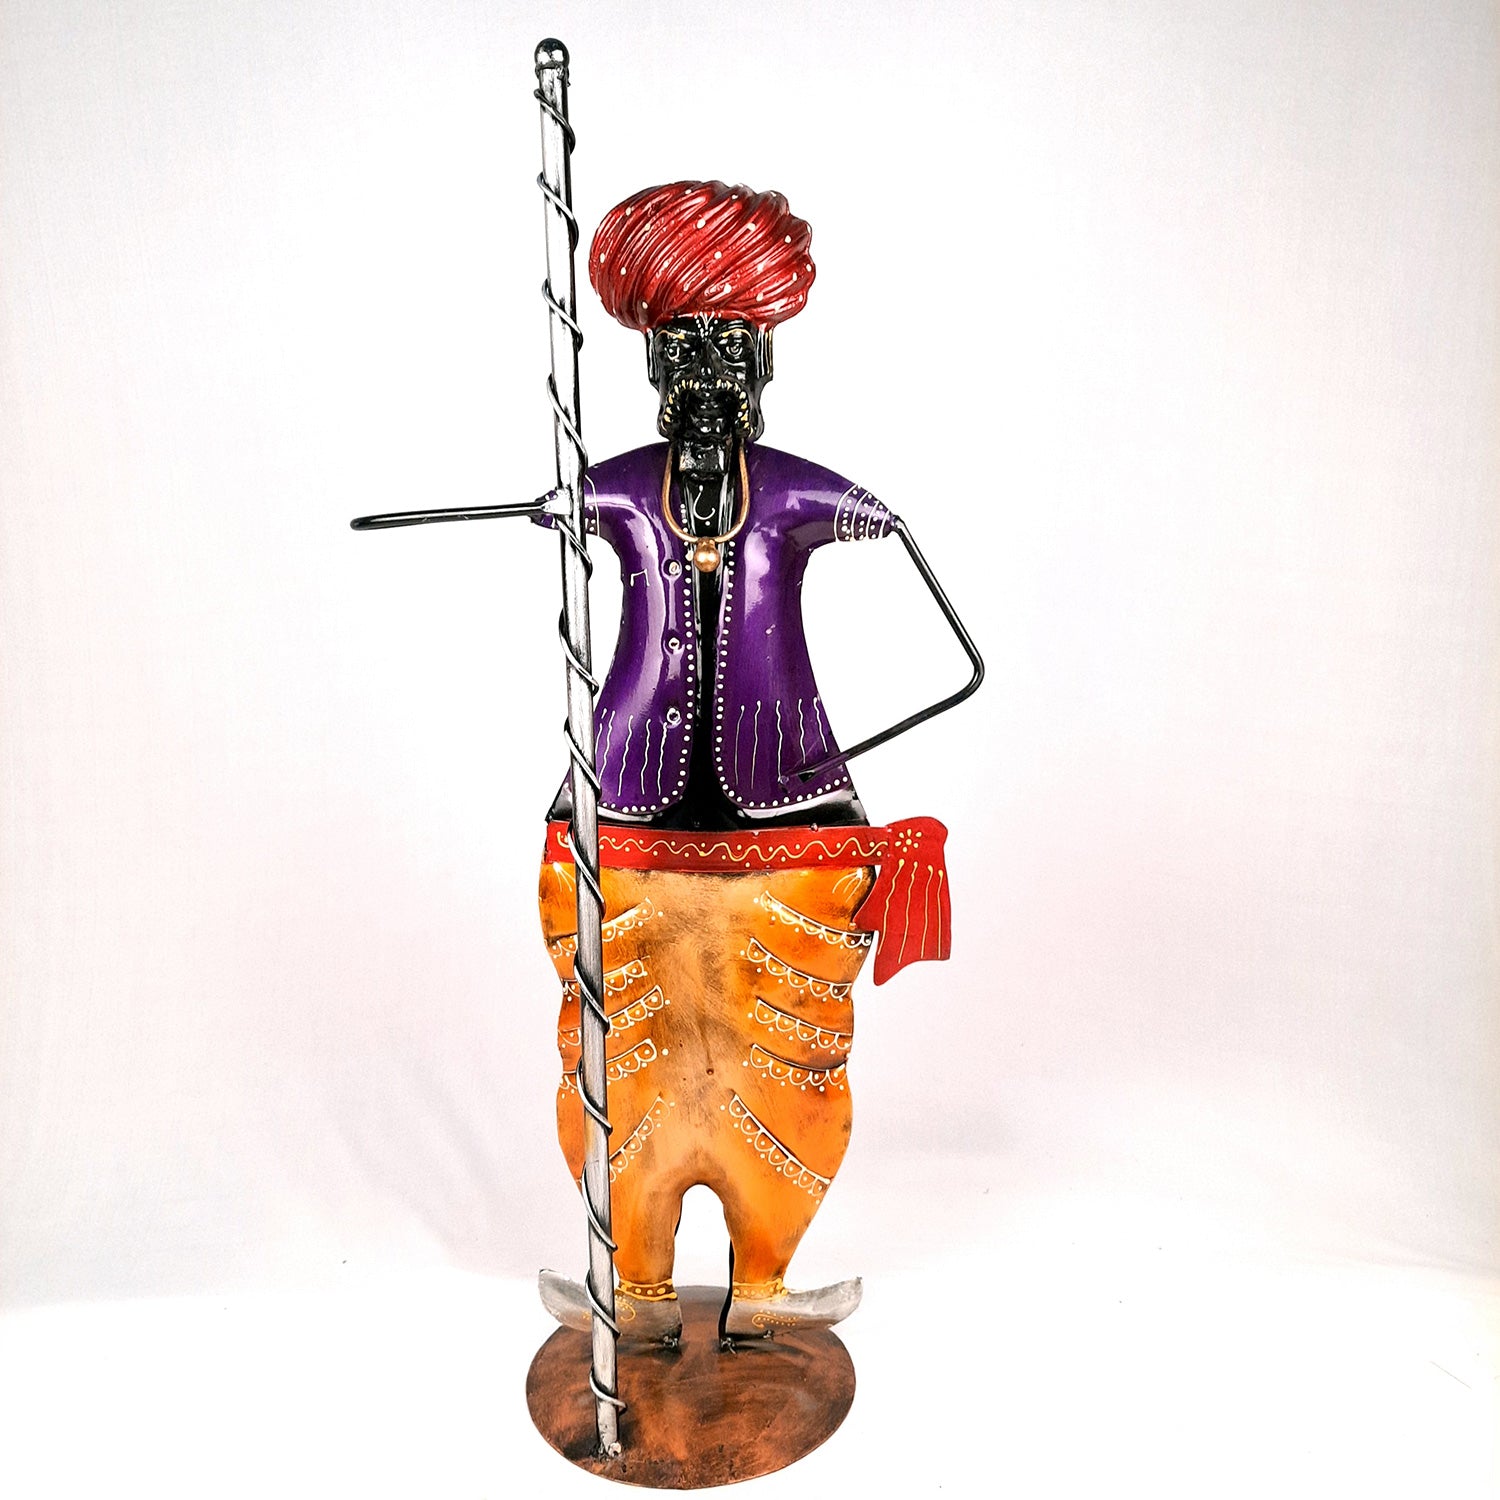 Showpiece Darbaan For Home Decor | Handicraft Figurines - For Entrance, Corner, Living Room, Office Decoration |Big Showpieces For Housewarming Gifts - 30 Inch - Apkamart #Color_Purple